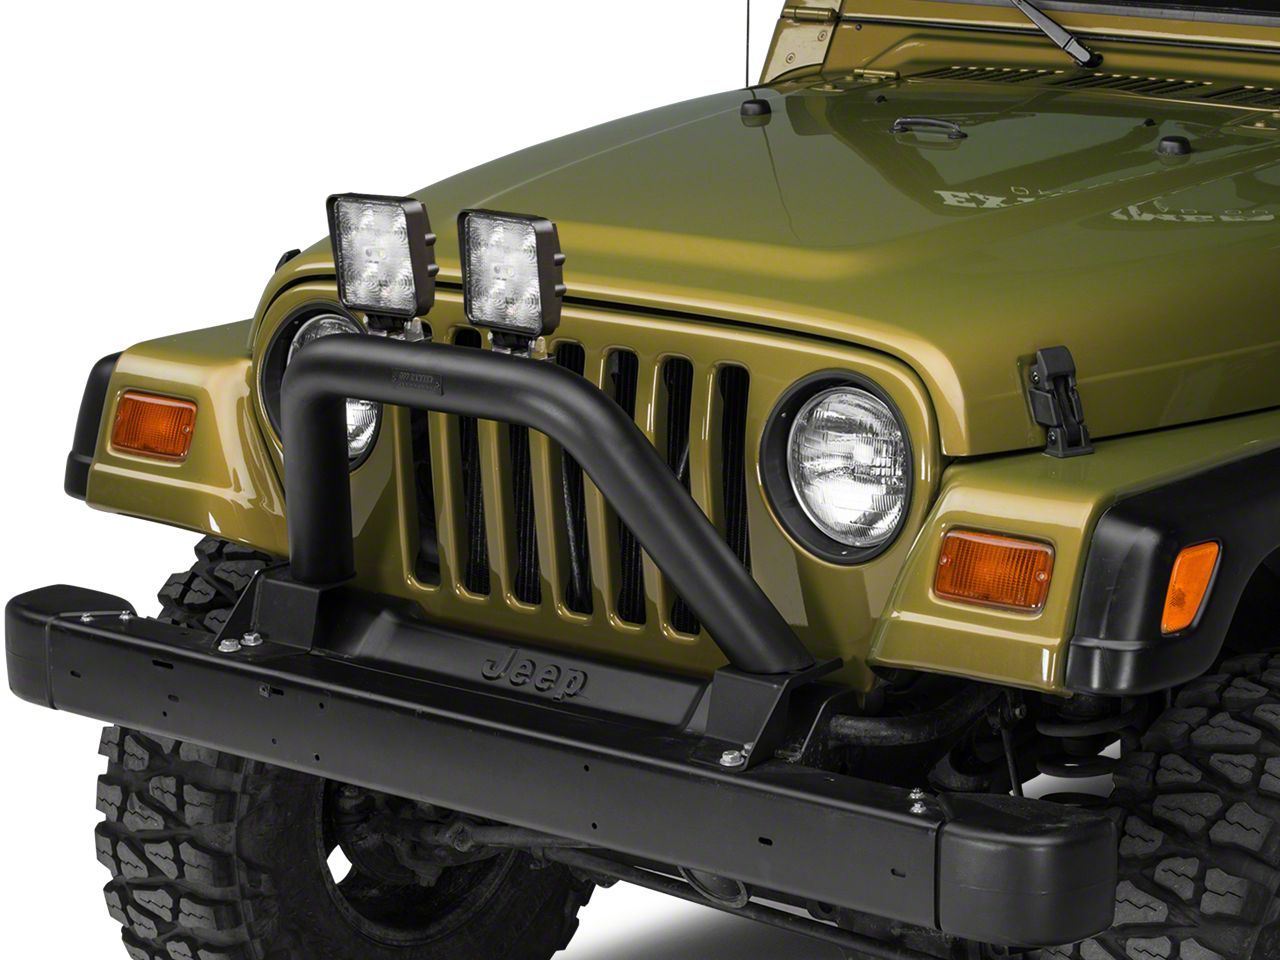 2001 Jeep Wrangler TJ Accessories & Parts | ExtremeTerrain